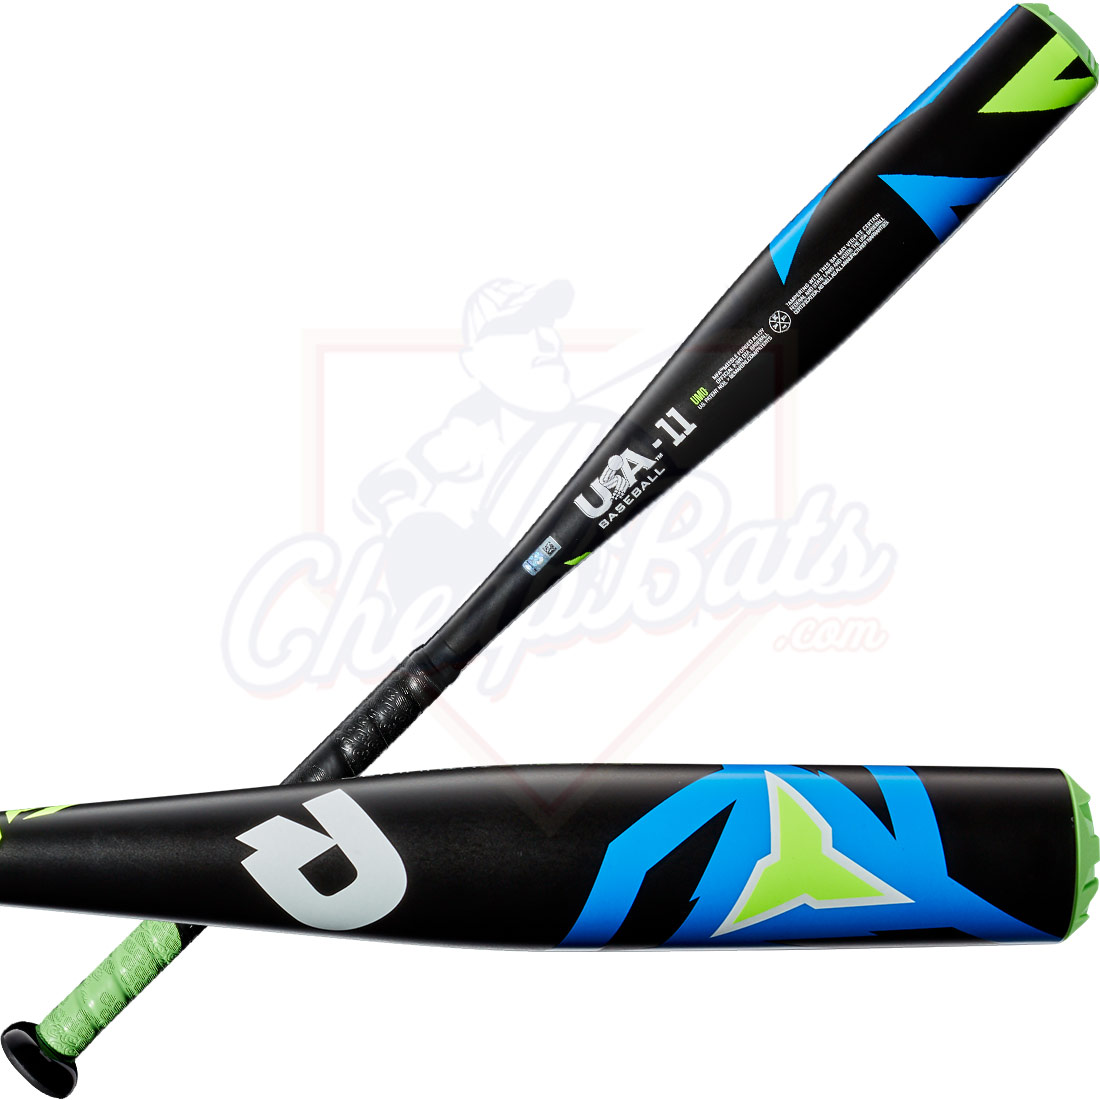 2019 Easton Rival 10 USA Youth Baseball Bat YSB19RIV10 27" 17 Oz for sale online 